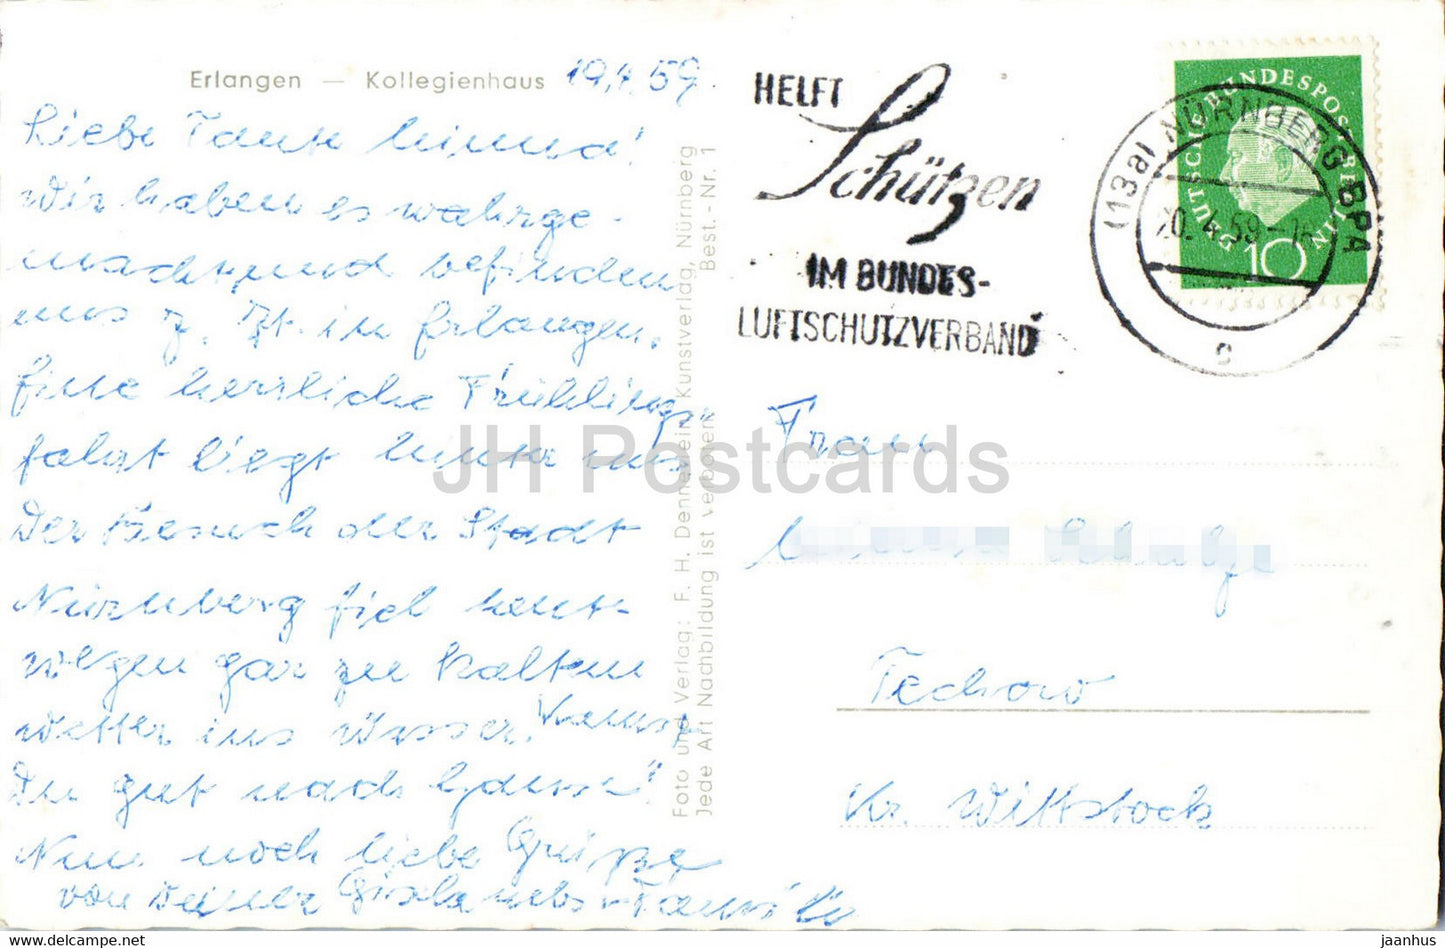 Erlangen - Kollegienhaus - carte postale ancienne - 1959 - Allemagne - utilisé